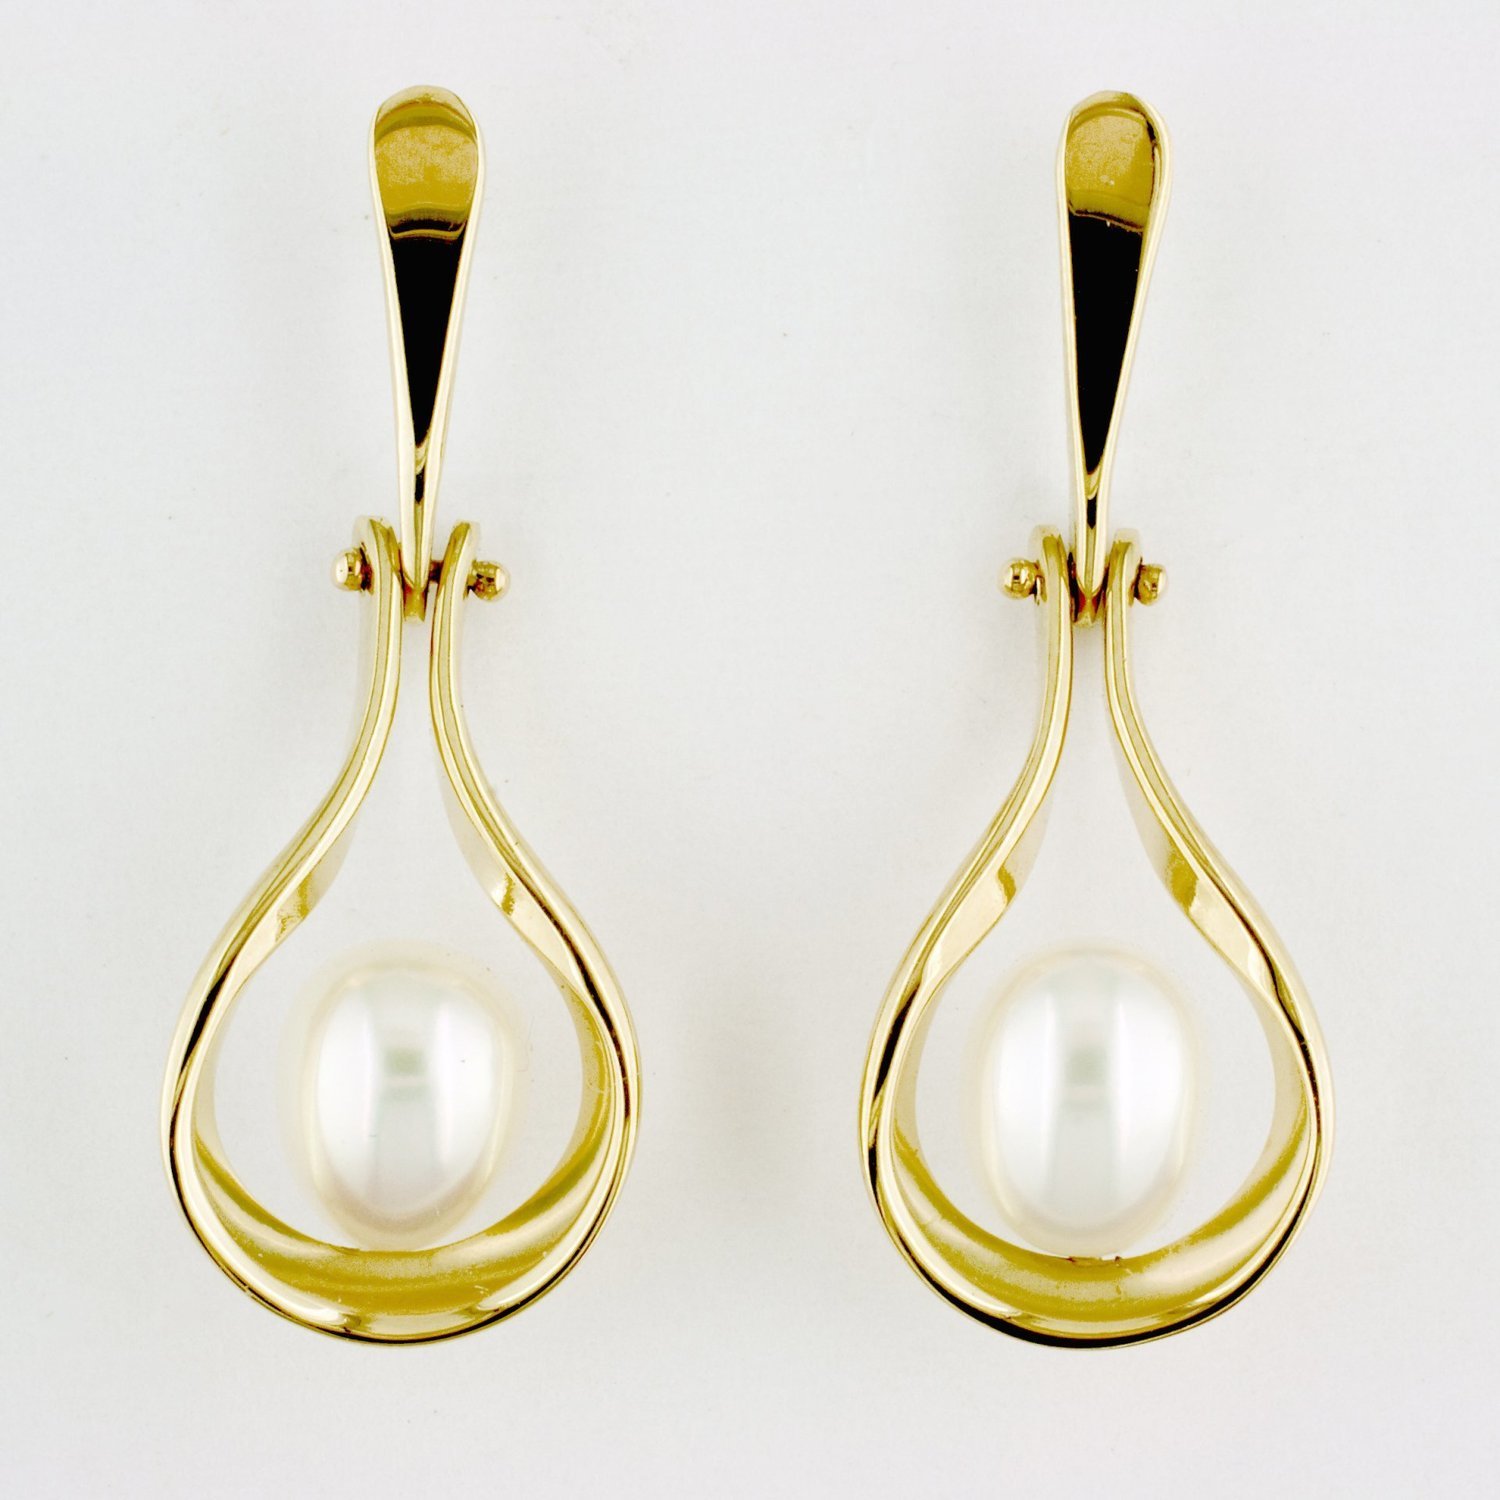 14K Yellow Gold Pearl Door-Knocker Earrings - Small